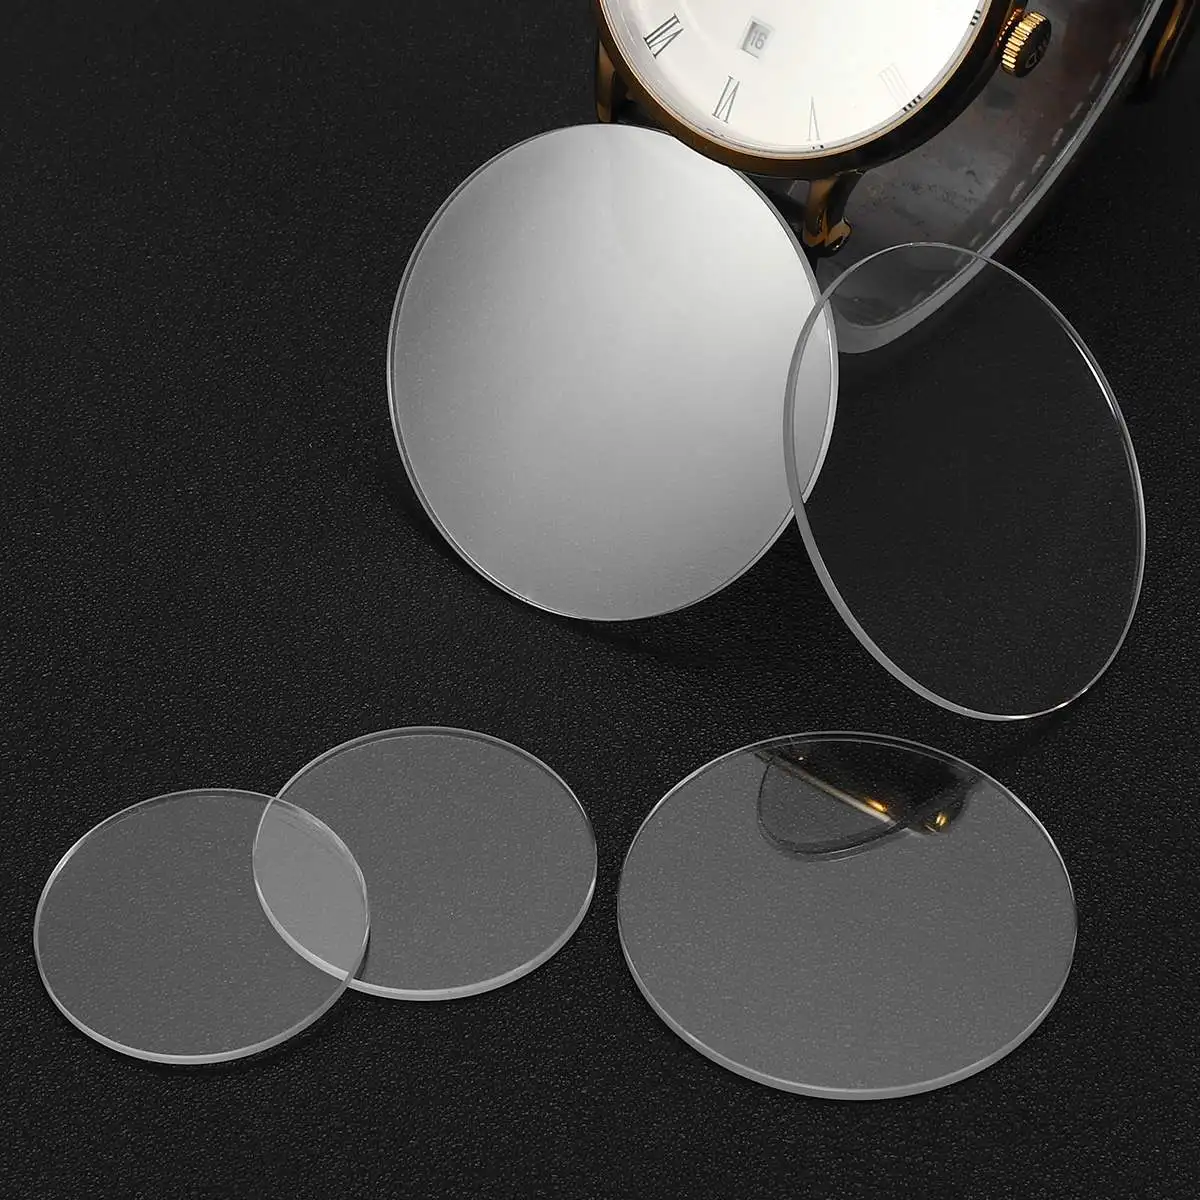 1pcs Round Flat Sapphire Glass Thick 1.2mm Clear Wrist